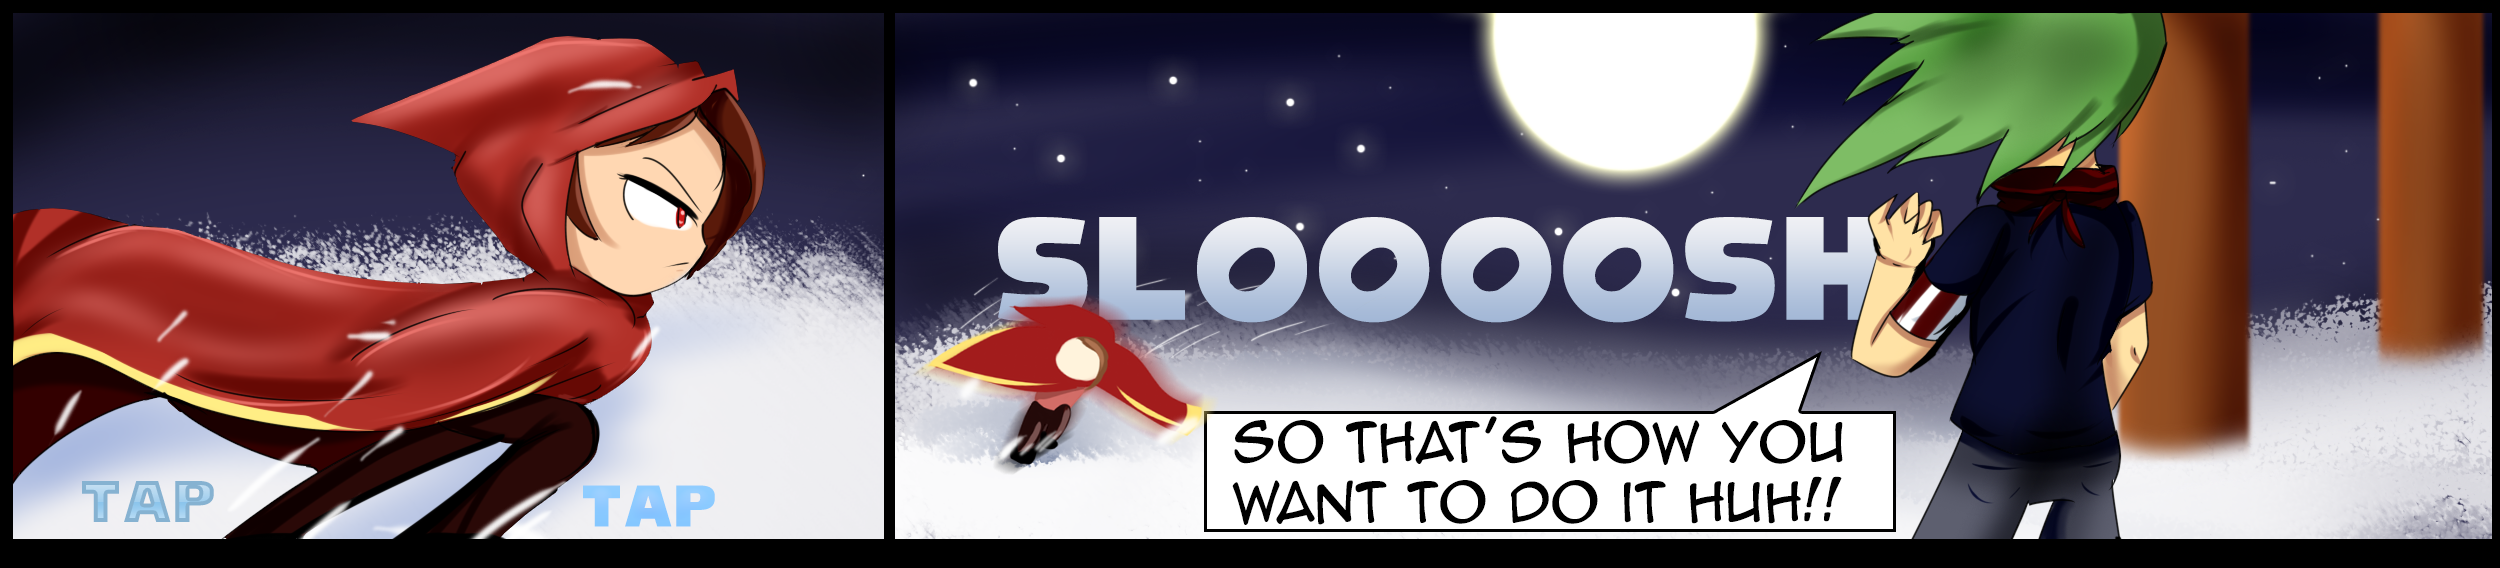 Comic strip of girl in red cloak walking away from boy in snow toward night sky.